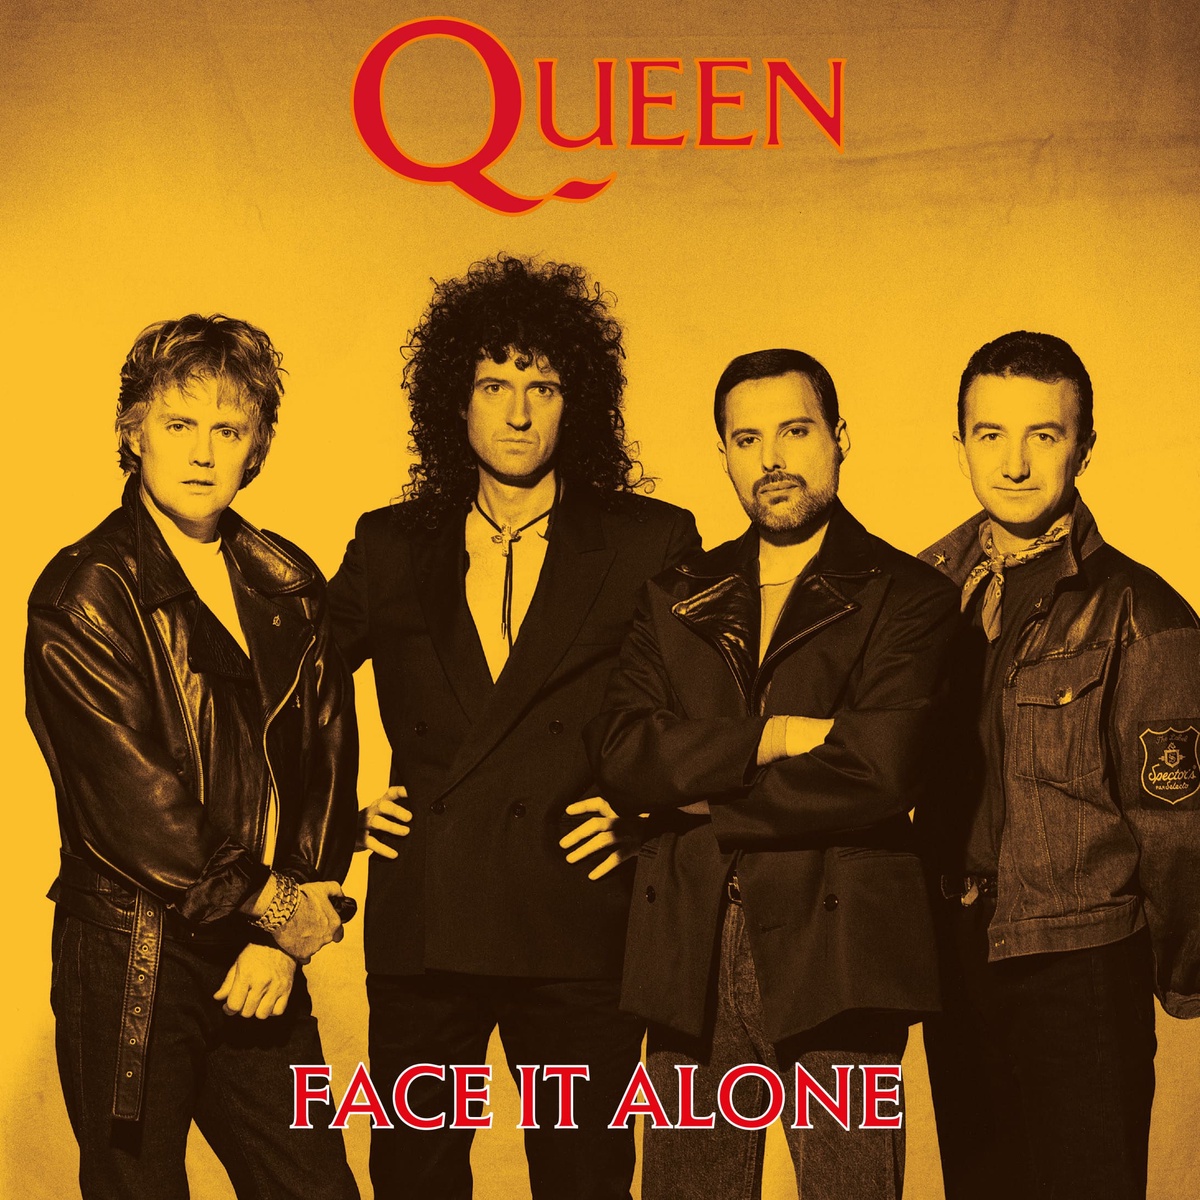 QUEEN วงร็อกระดับตำนาน เซอร์ไพรส์ปล่อยเพลงใหม่ Face It Alone พร้อมเสียงร้องของ Freddie Mercury นักร้องนำที่ได้บันทึกเสียงไว้ช่วงทำอัลบั้ม The Miracle ในปี 1988